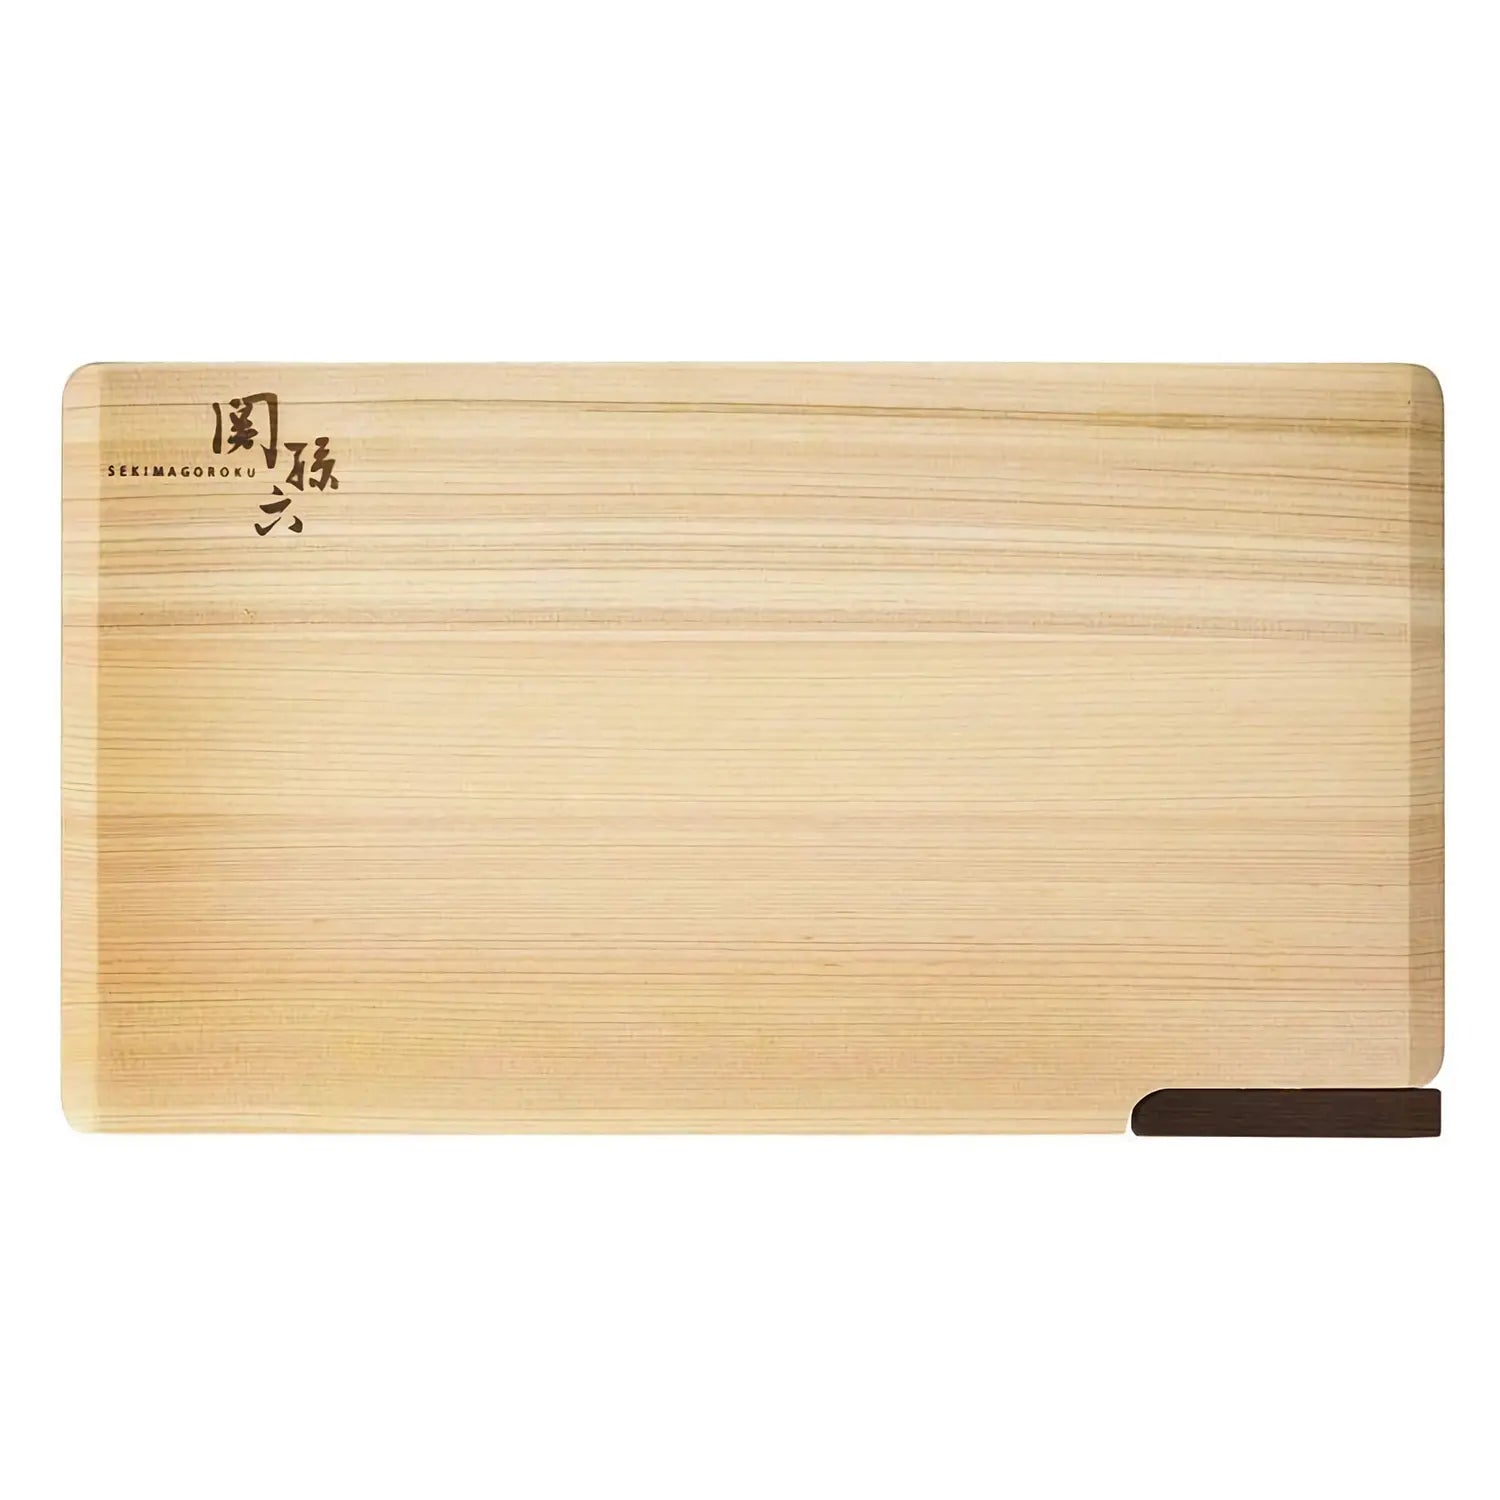 Daiwa Hinoki Cypress Cutting Board with Stand 36cm Dishwasher safe